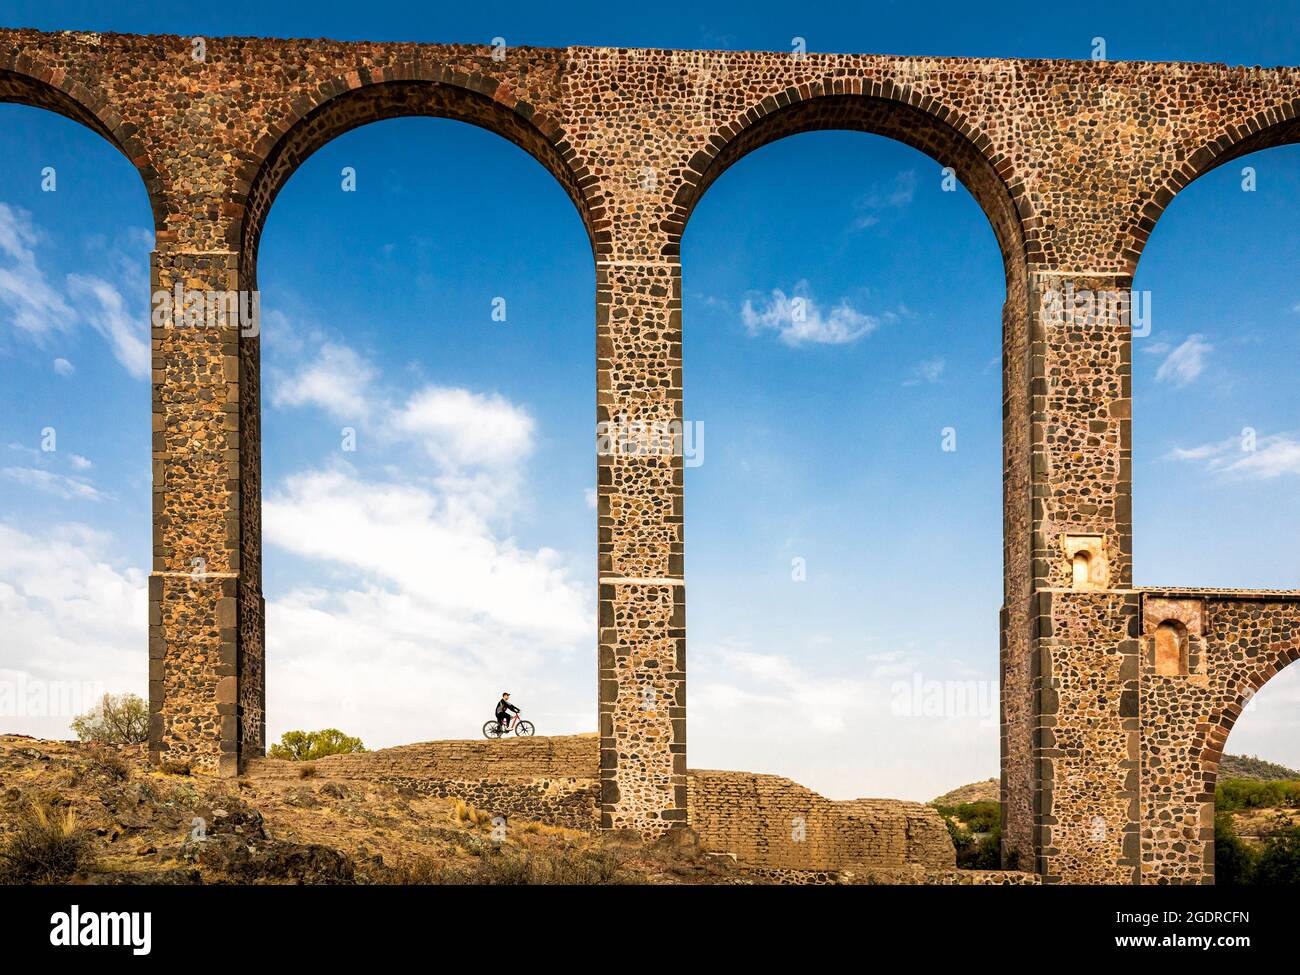 Un cycliste admire le Père Tembleque Aqueduct, Hidalgo, Mexique. Banque D'Images